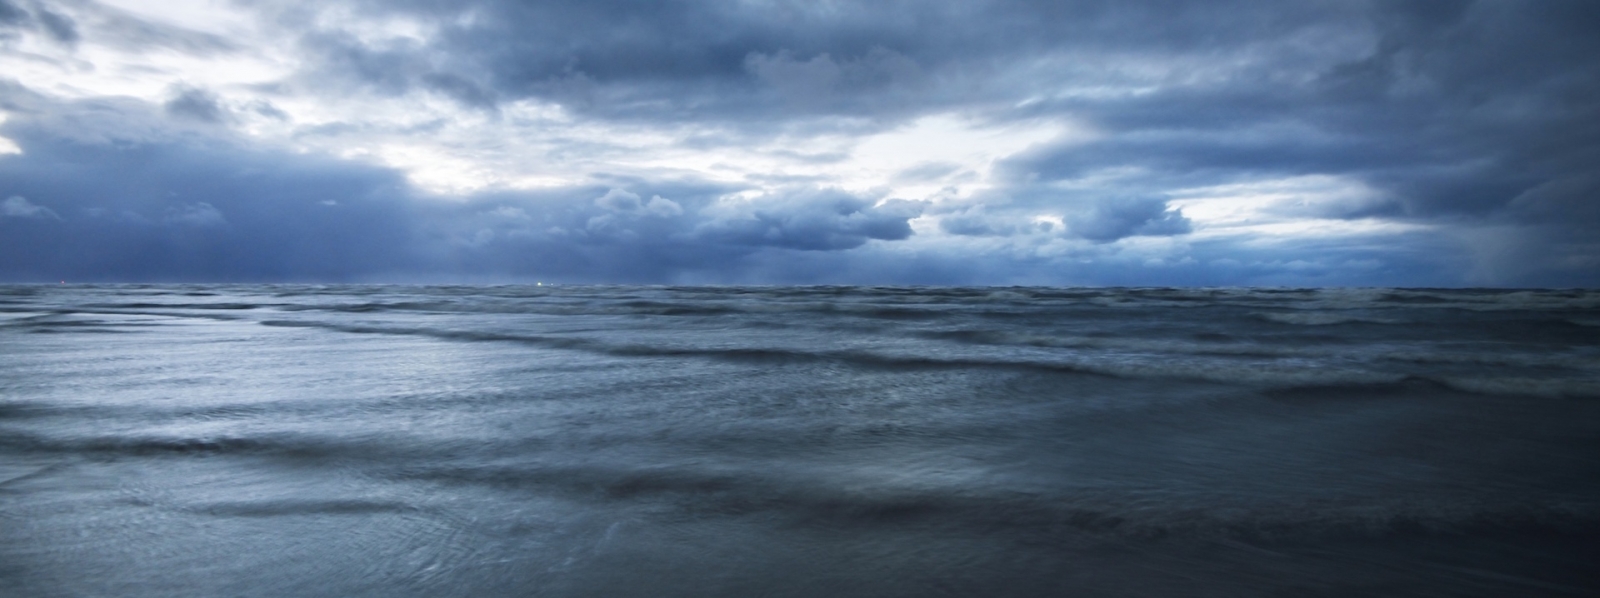 Dark storm on North Sea